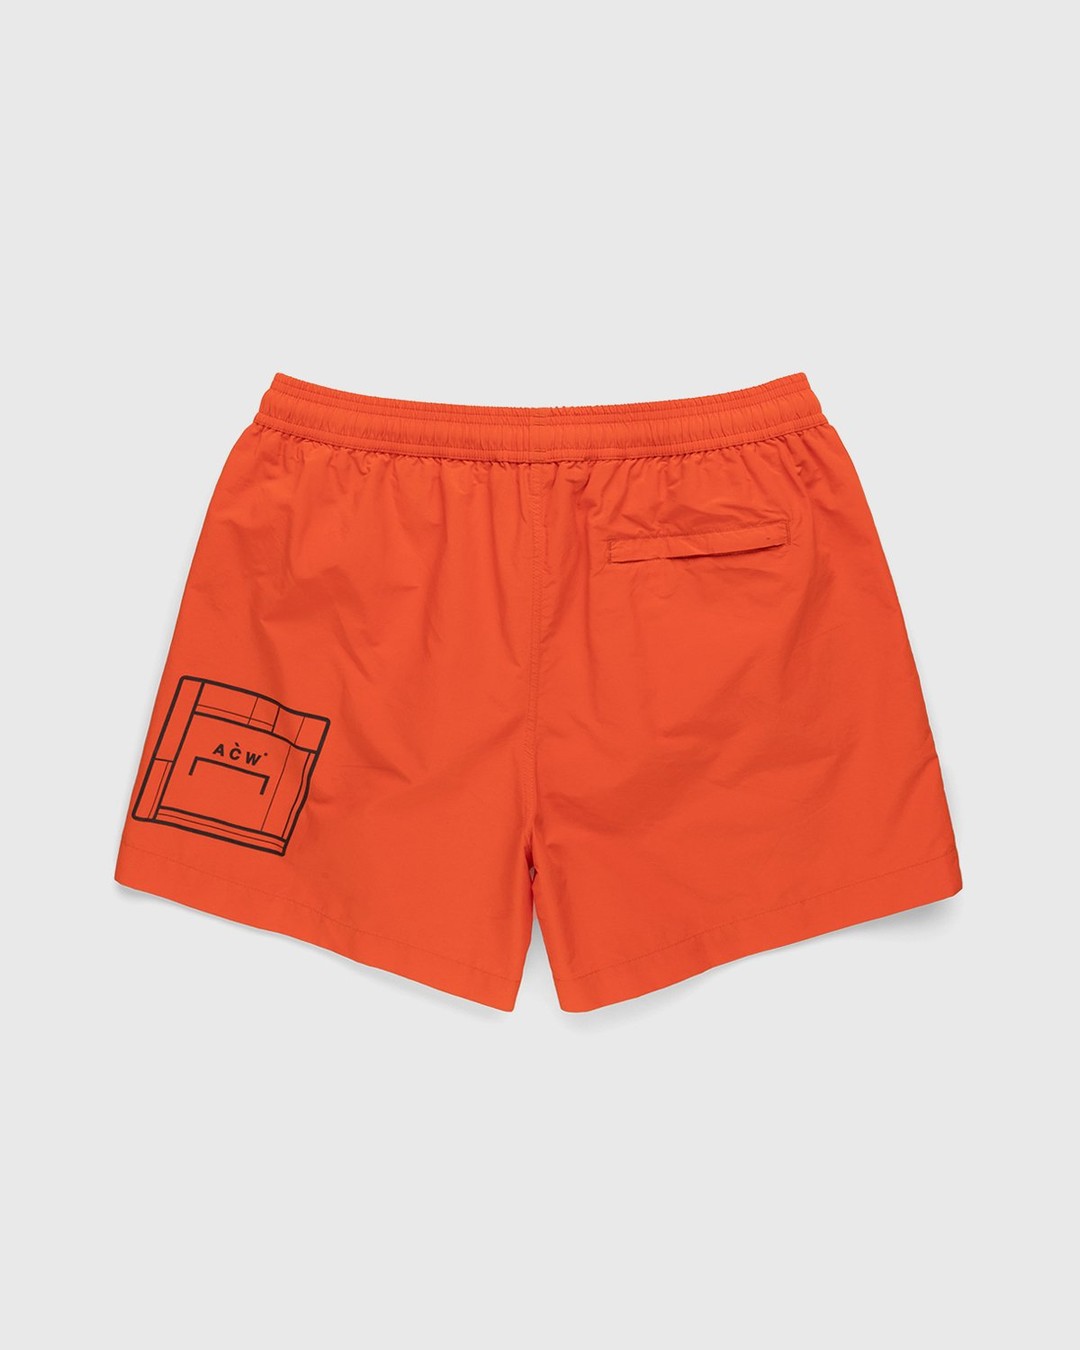 A-Cold-Wall* – Natant Nylon Short Rich Orange - Shorts - Orange - Image 2